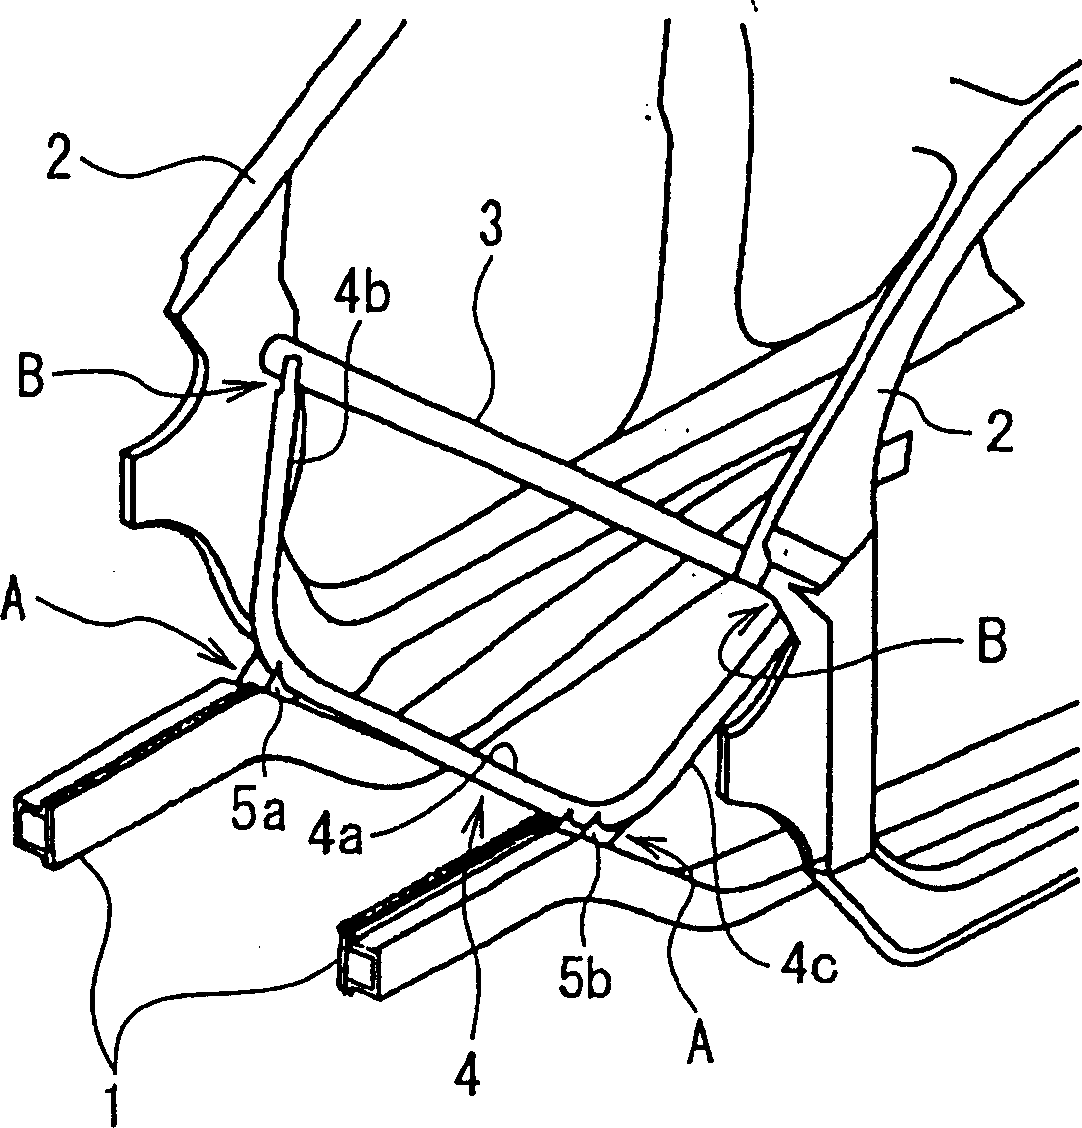 Vehicle front-end struture